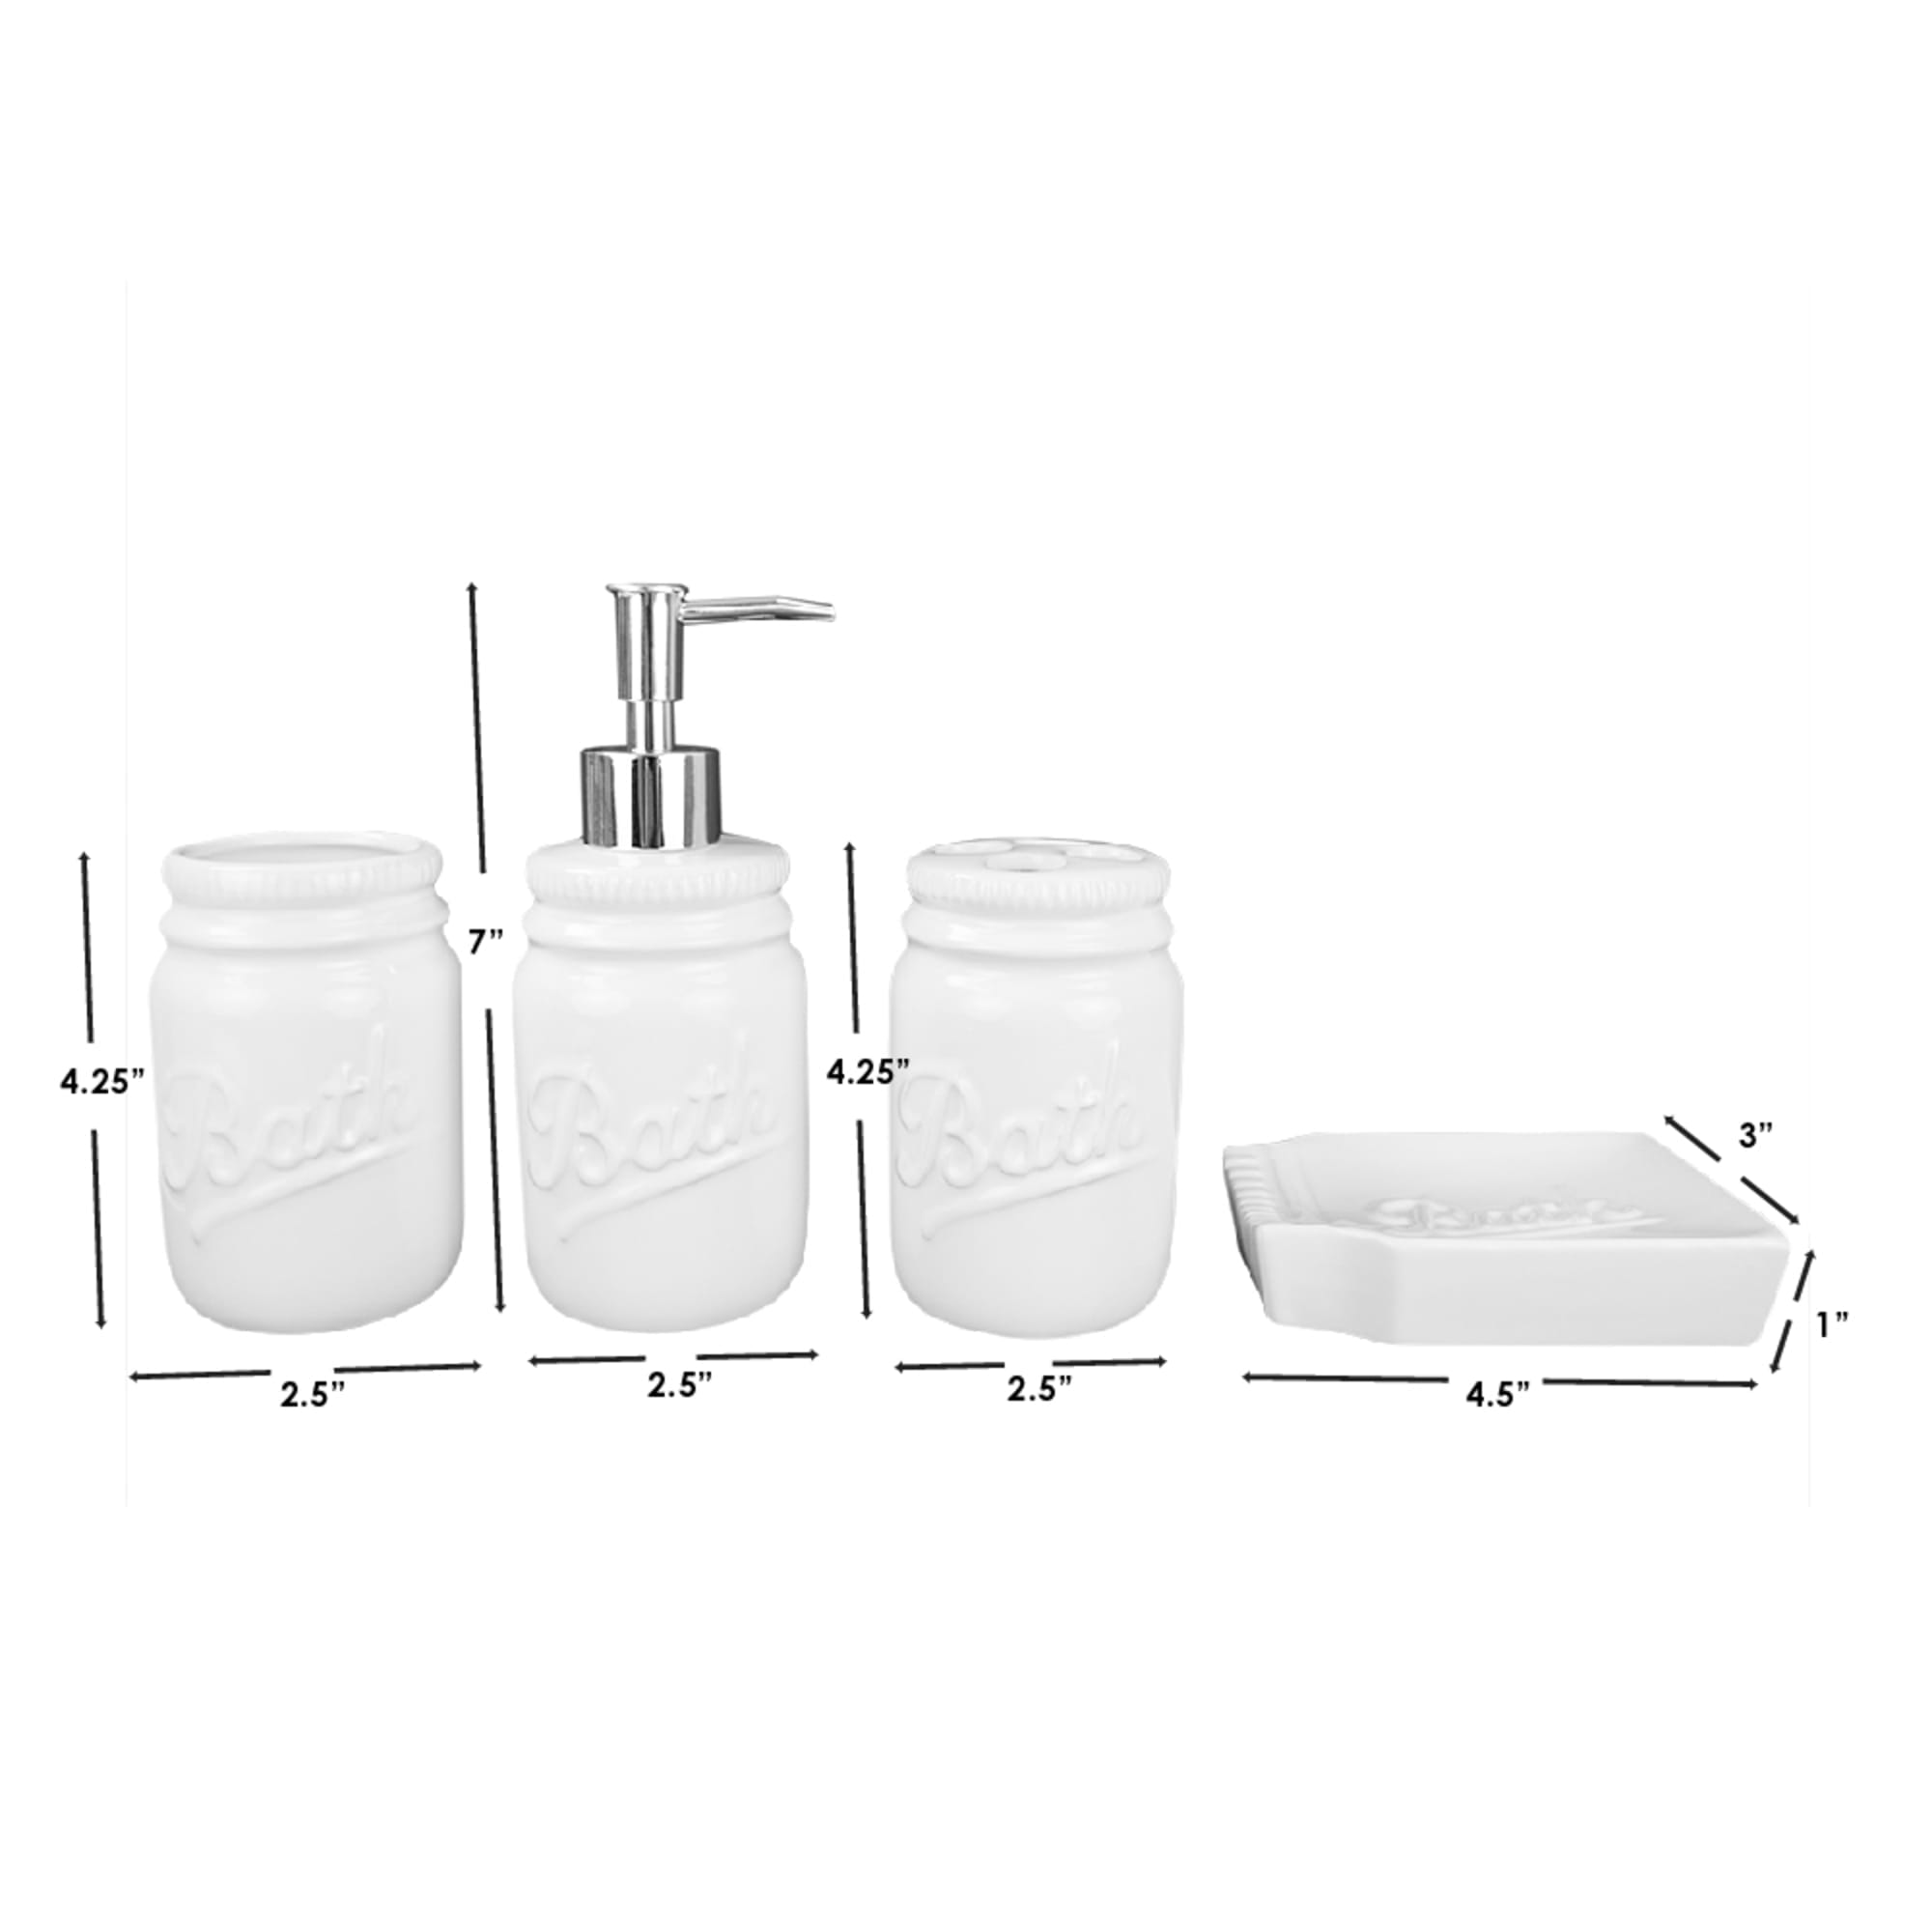 Home Basics 4 Piece Ceramic Mason Jar Bath Set, White $10.00 EACH, CASE PACK OF 6